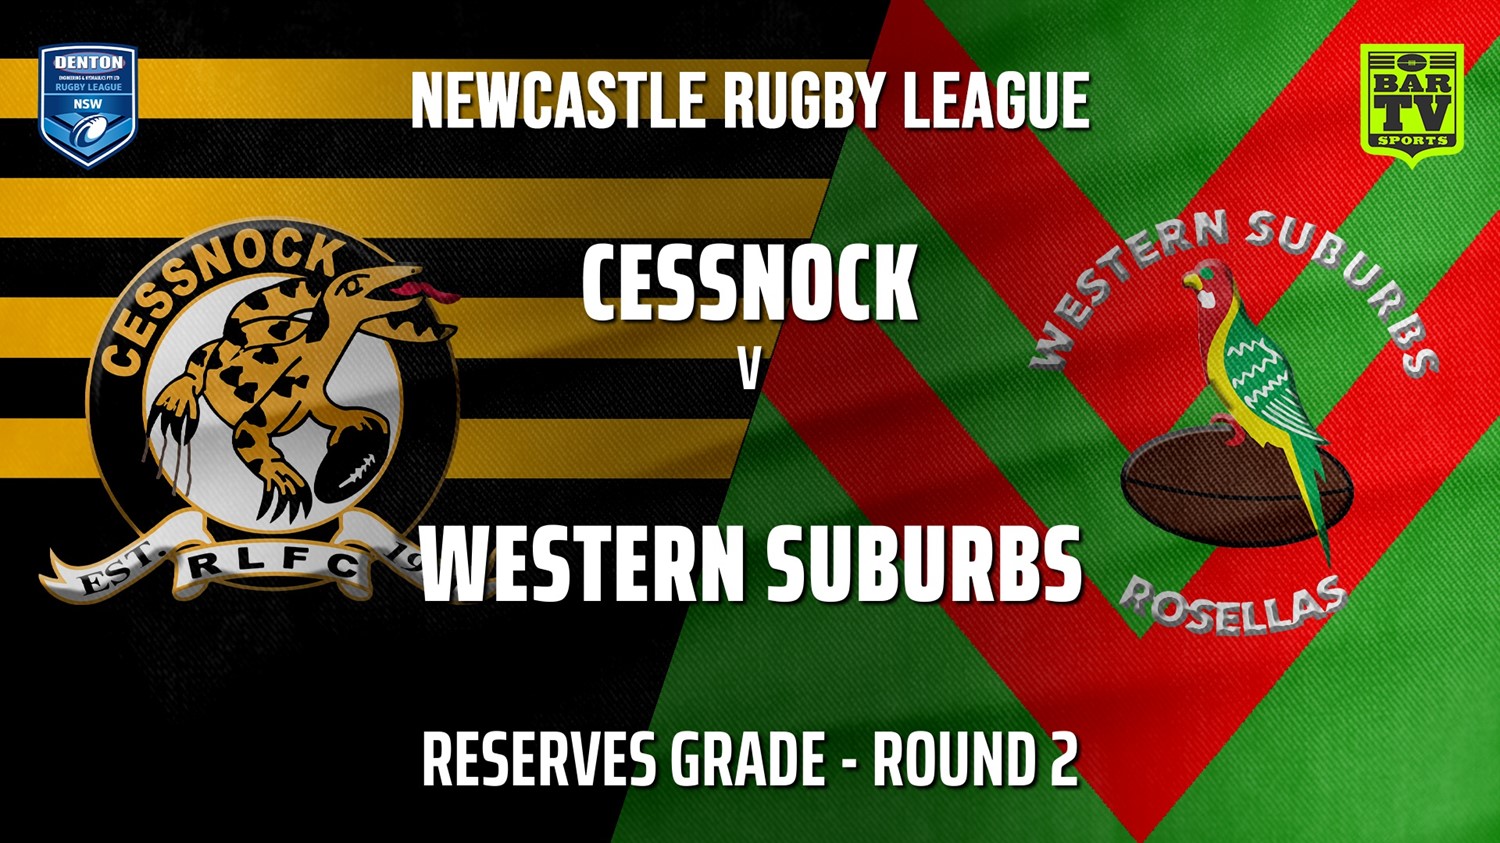 Newcastle Rugby League Round 2 - Reserves Grade - Cessnock Goannas v Western Suburbs Rosellas Slate Image